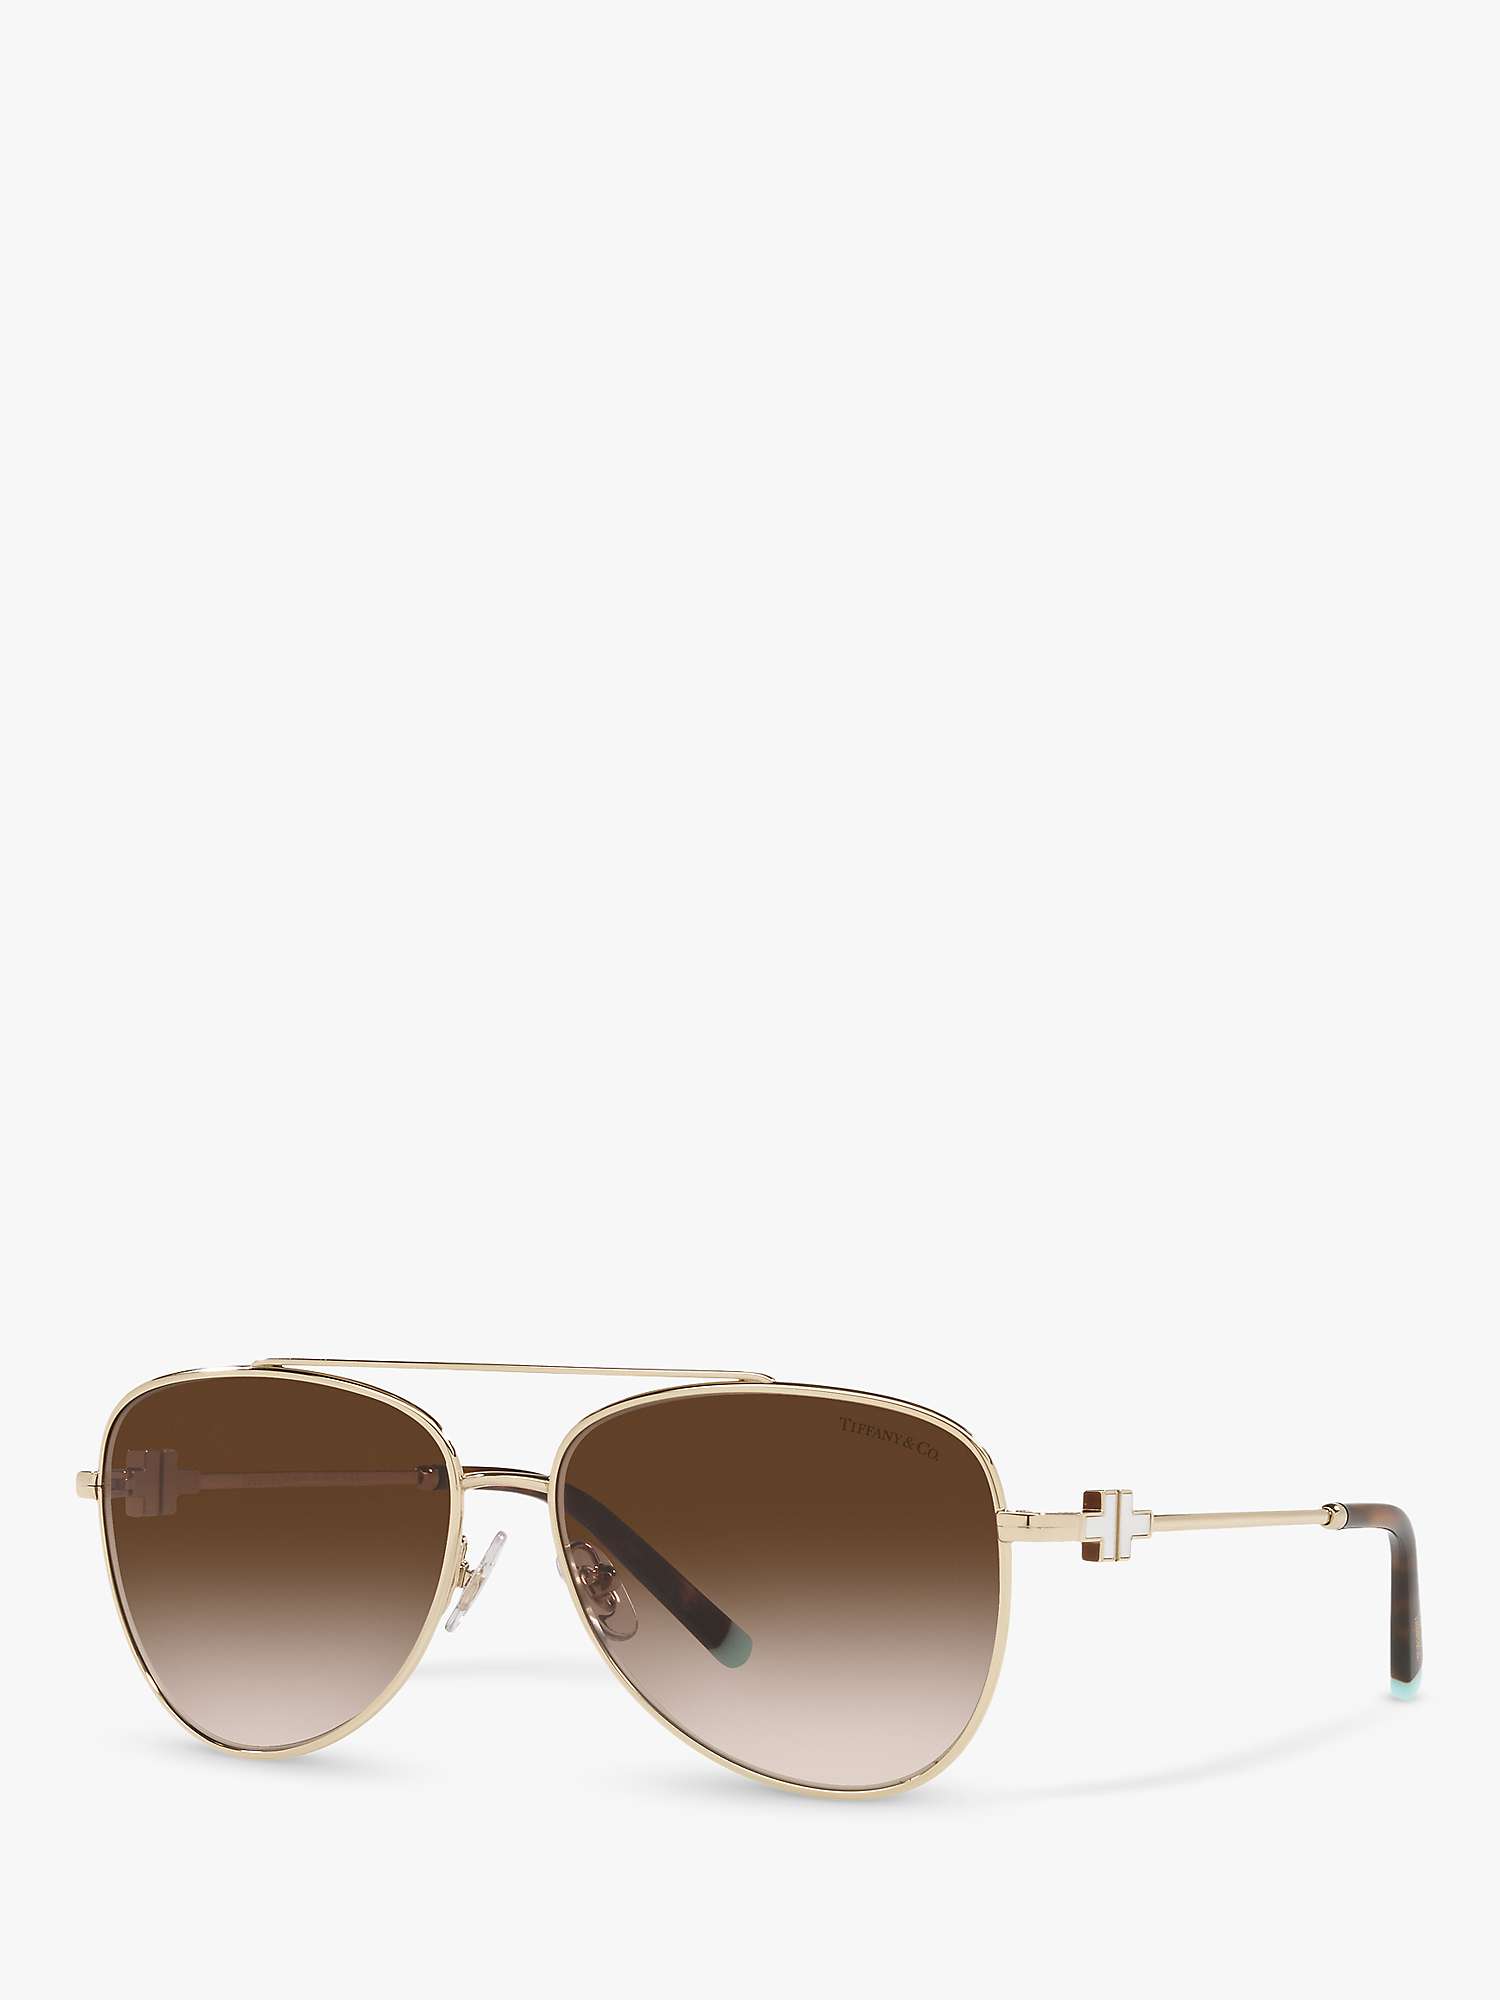 Buy Tiffany & Co TF3080 Women's Aviator Sunglasses Online at johnlewis.com